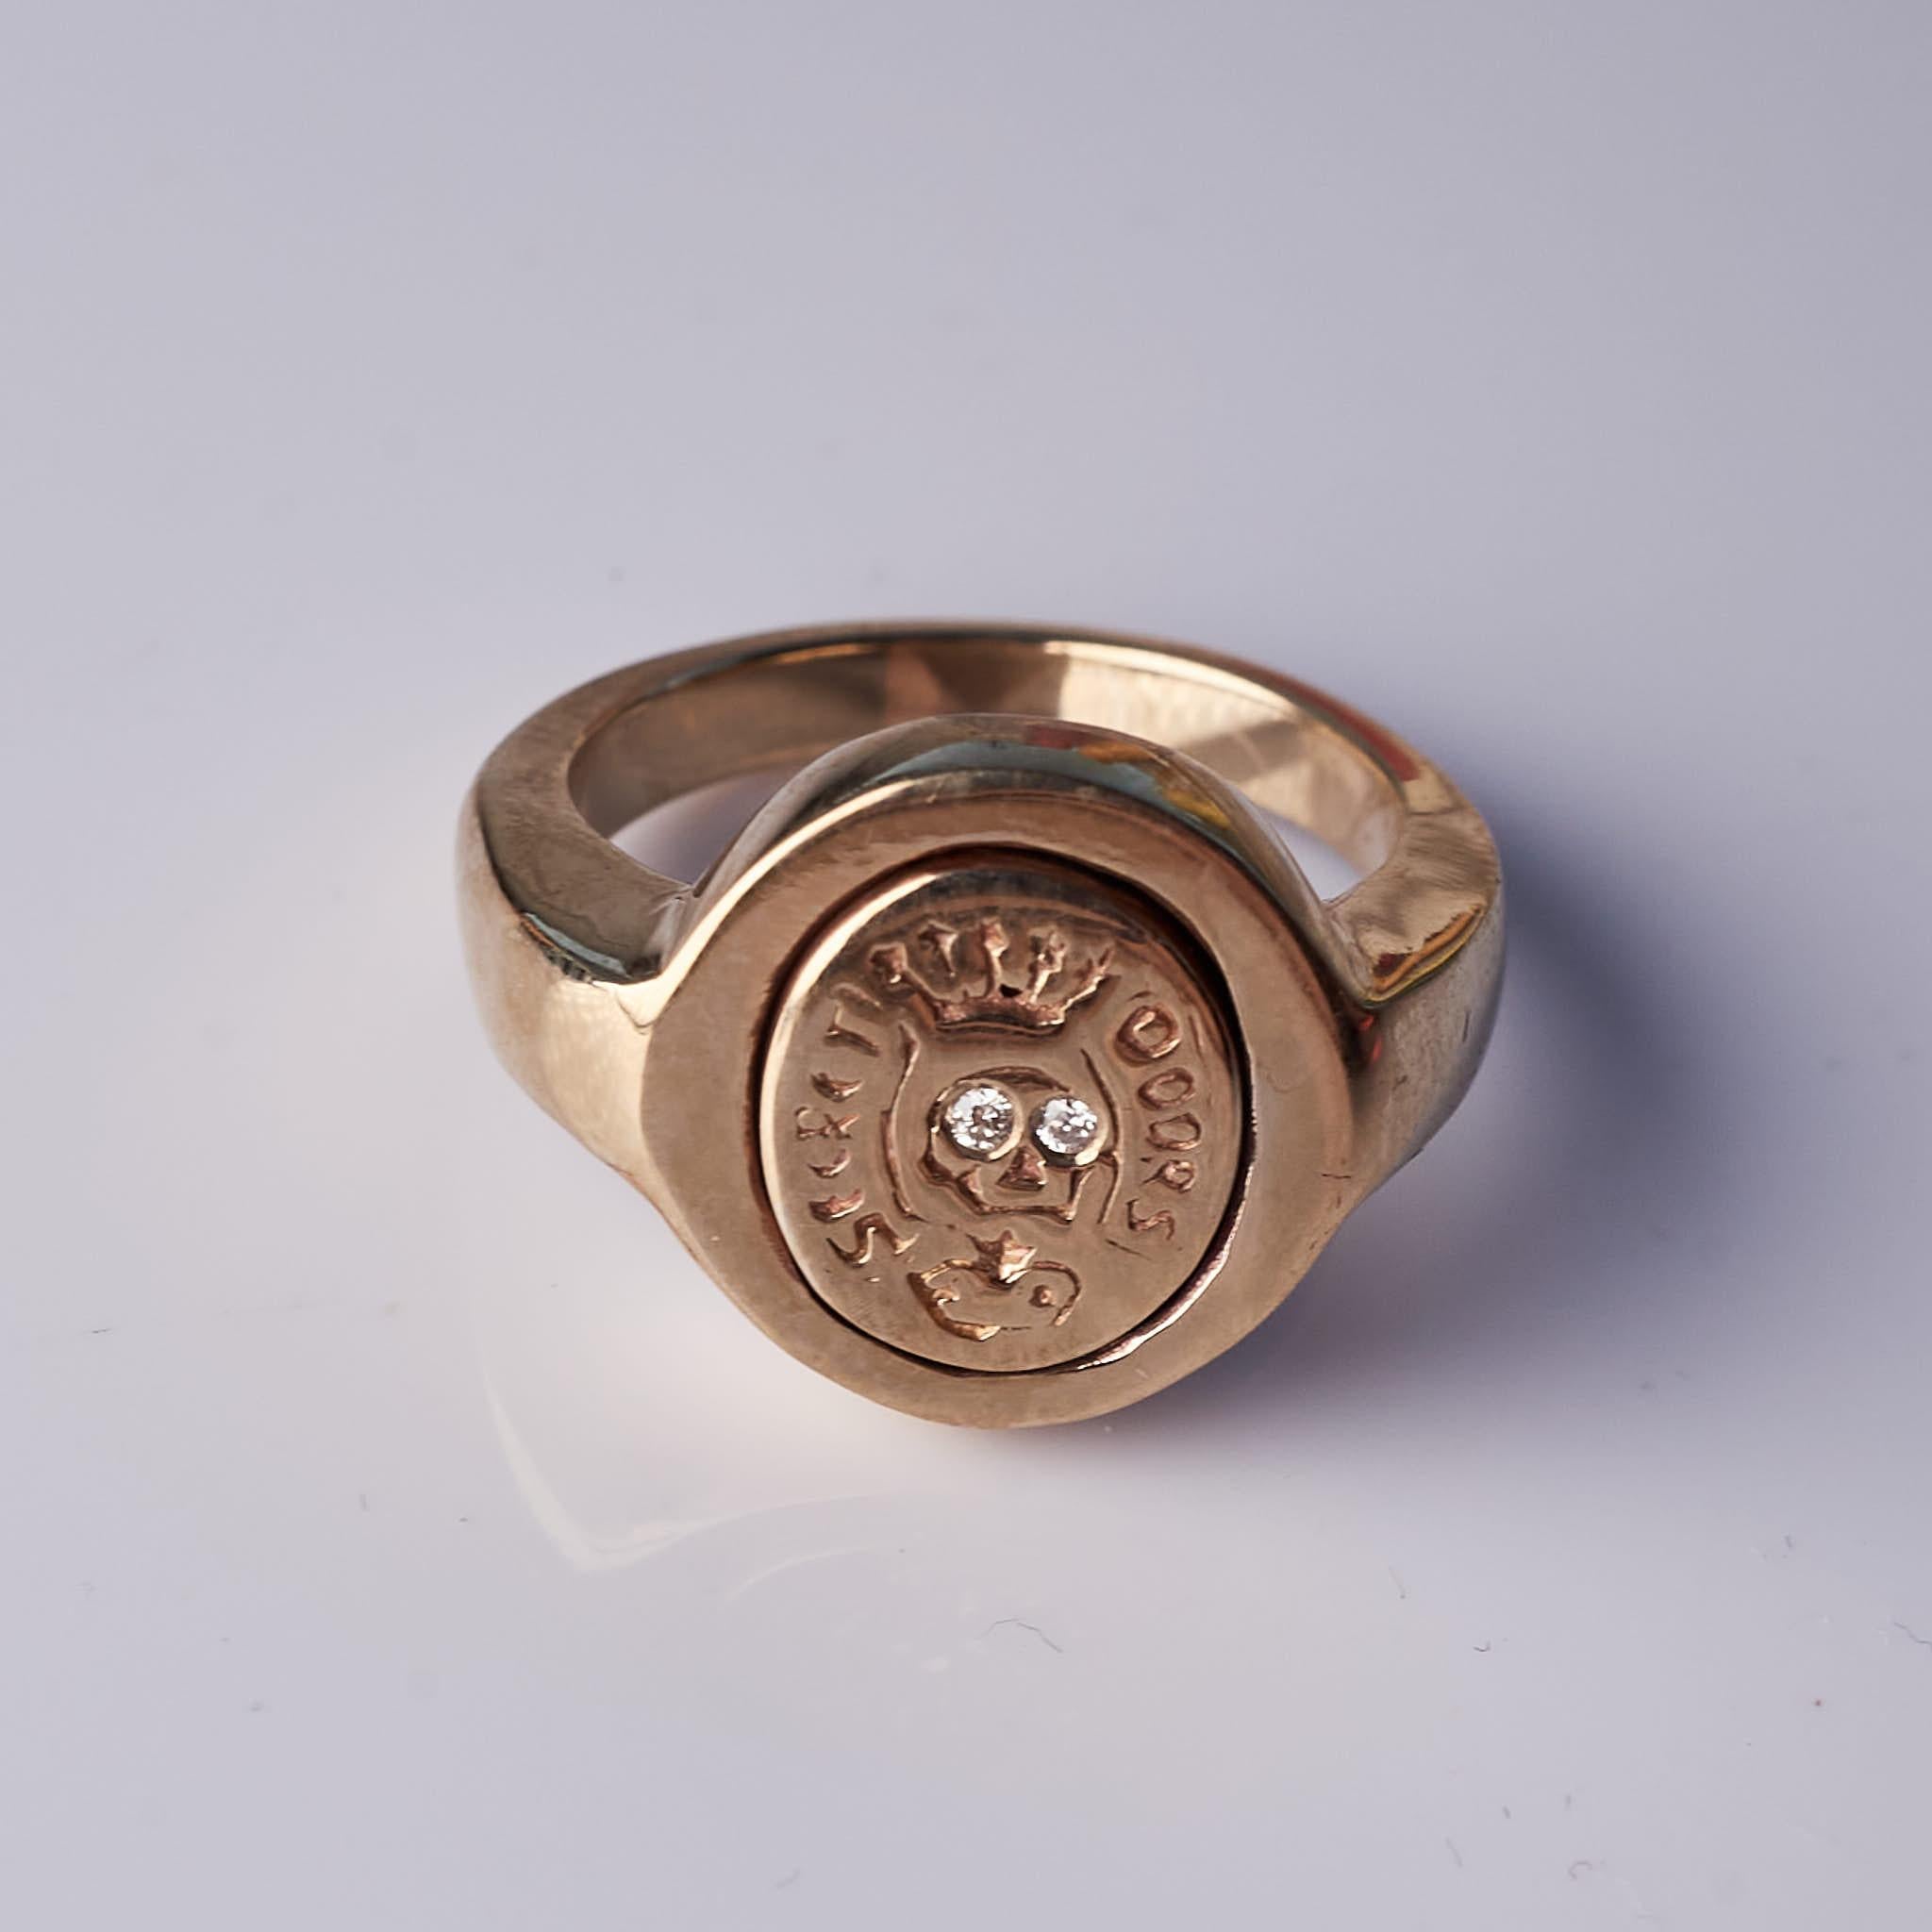 White Diamond Crest Signet Ring Memento Mori Style Skull 
Material: Bronze
Designer: J DAUPHIN 
Size: 6 1/2
Signature piece 